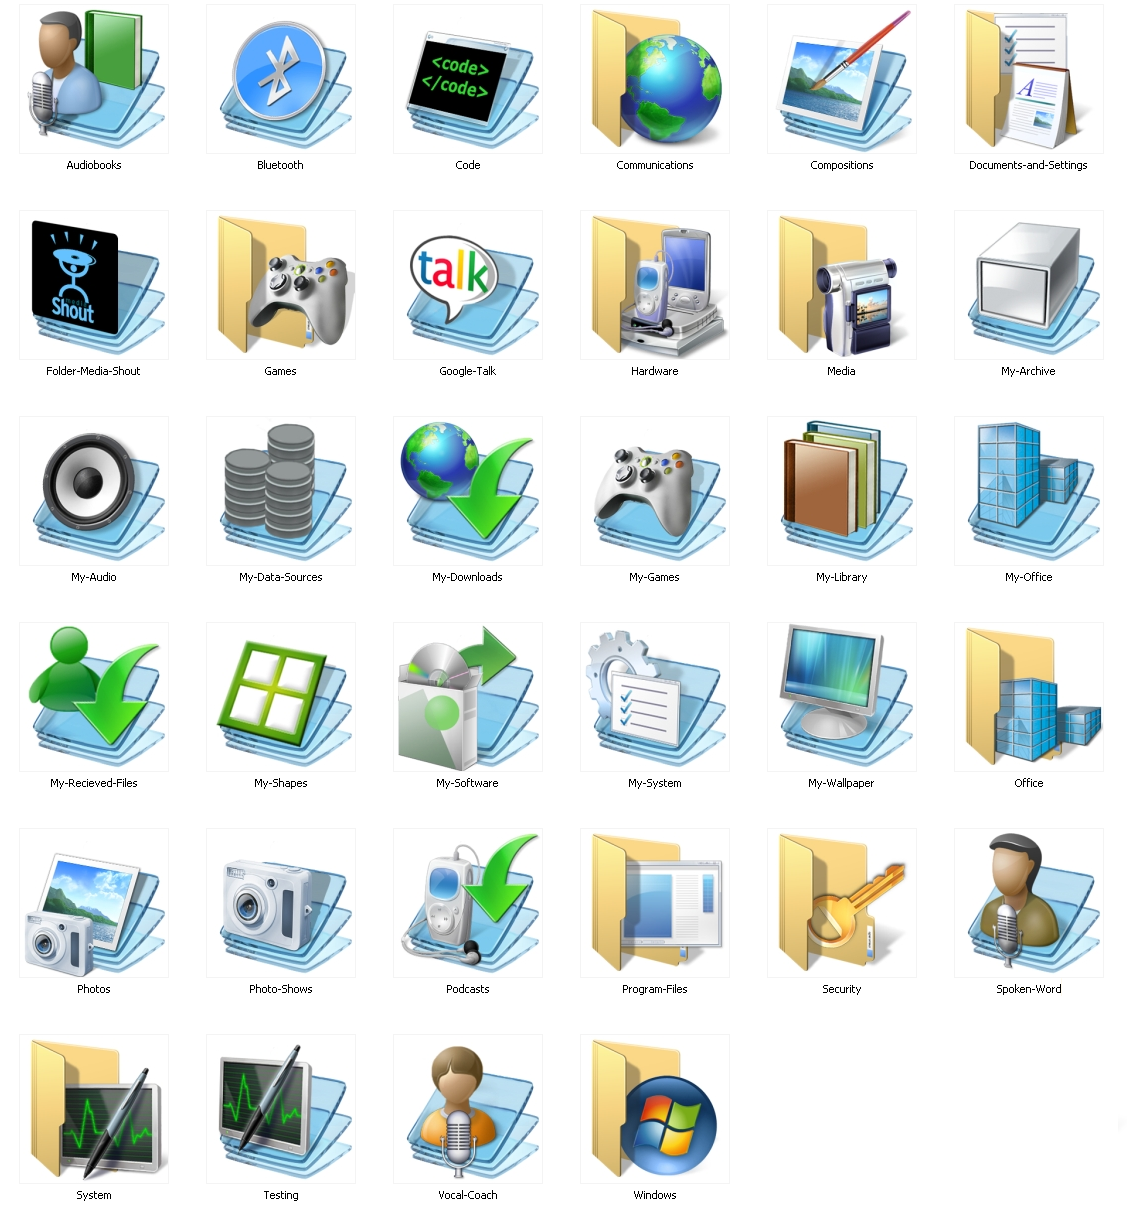 Vista Folder Icons